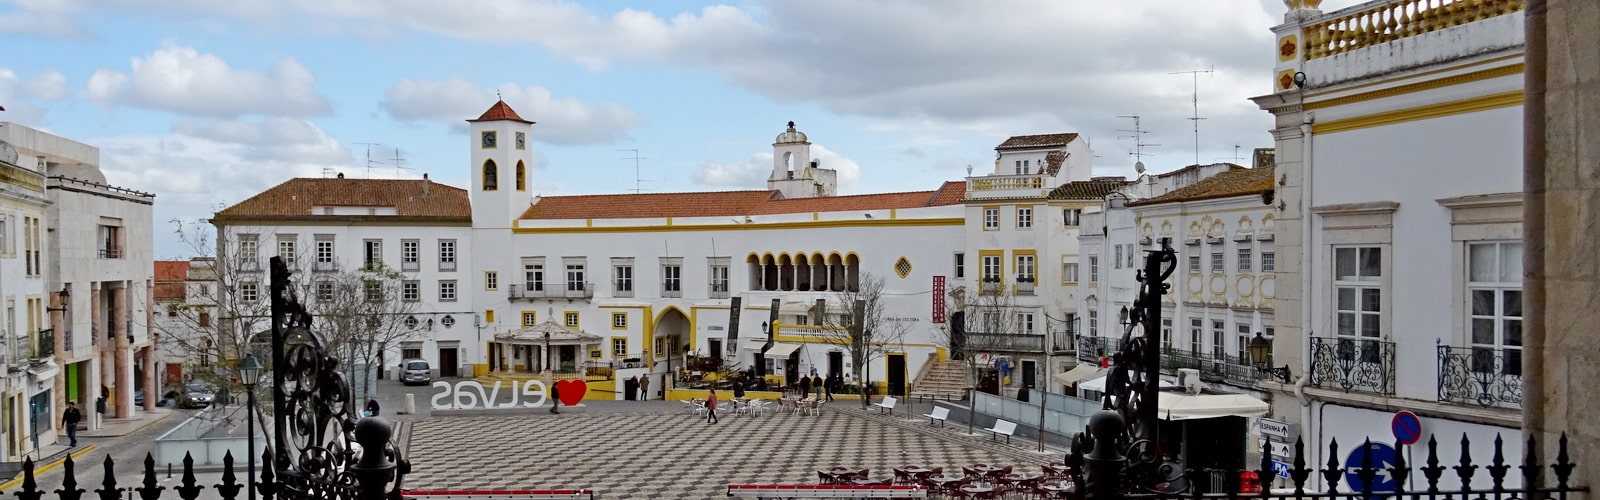 The Praça da República (Square) in the historic center of Elvas